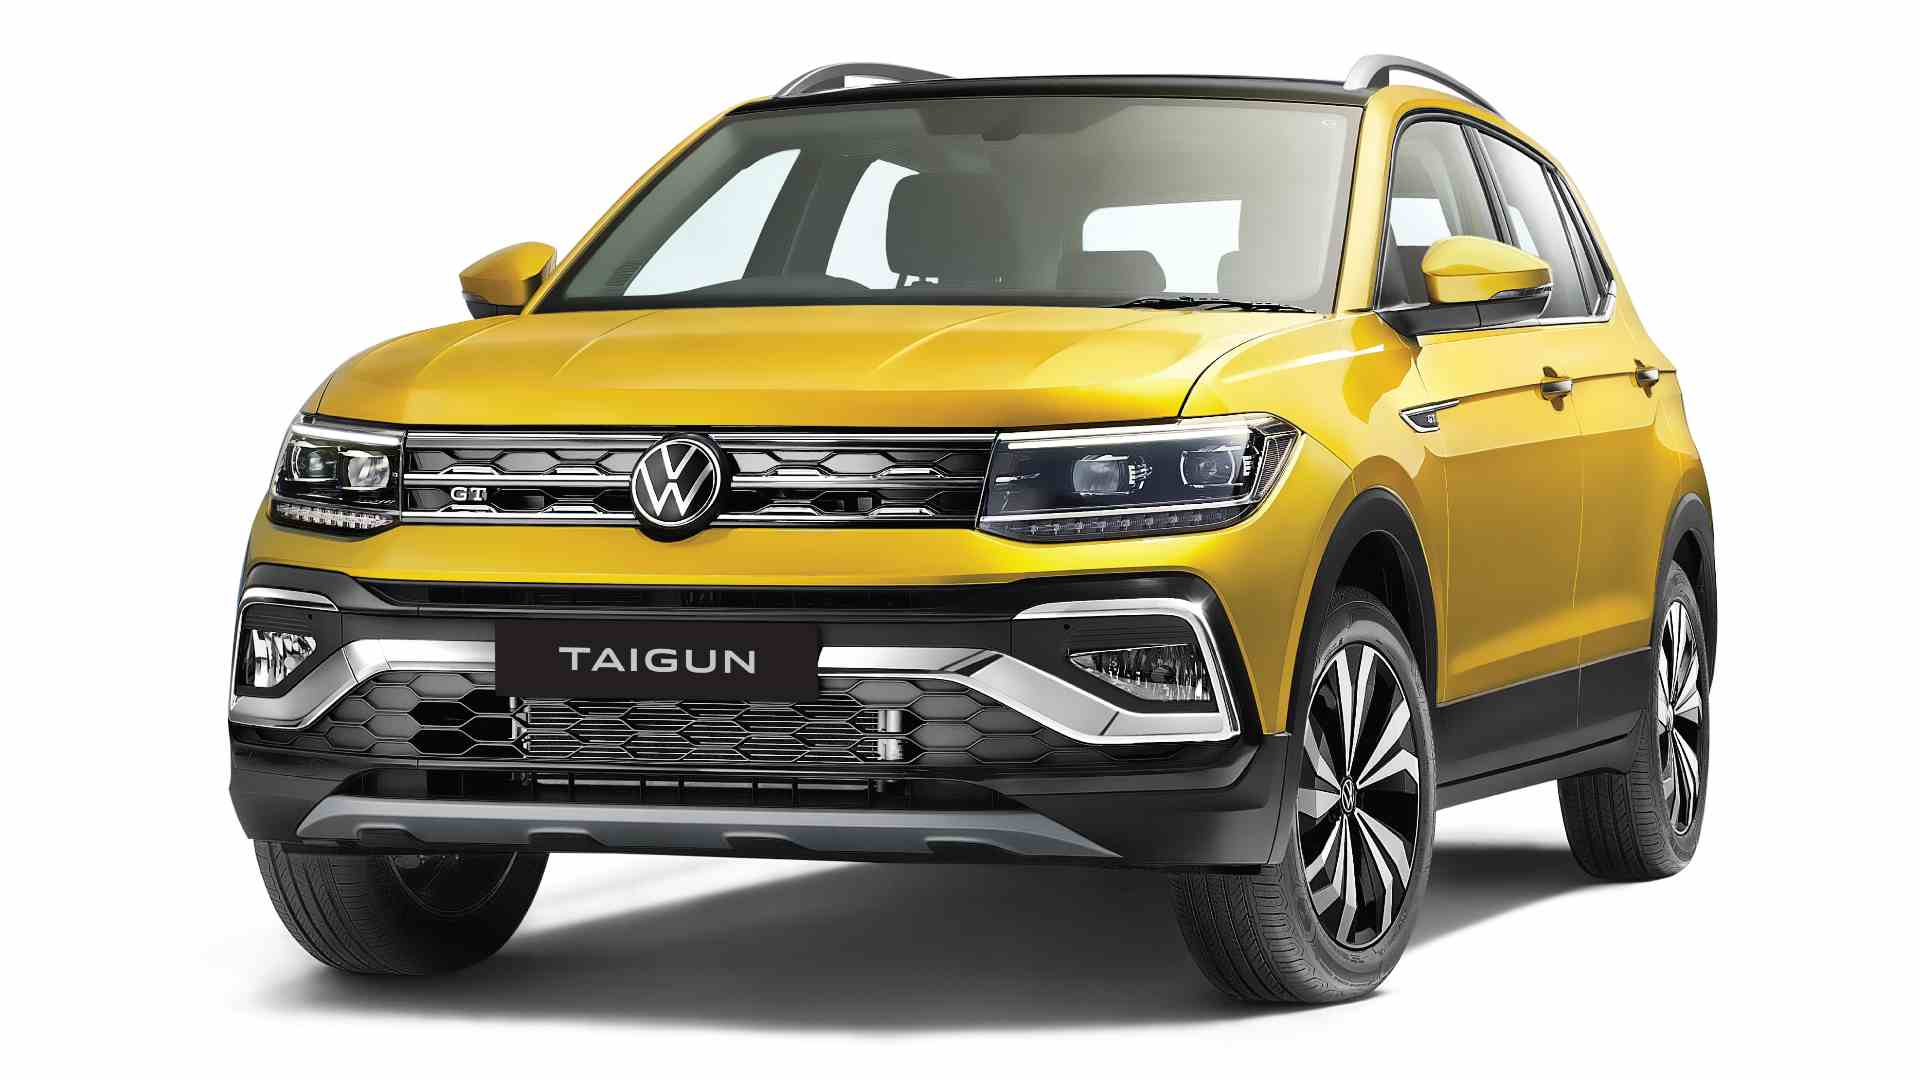  Volkswagen Taigun SUV revealed in production form ahead of festive season launch